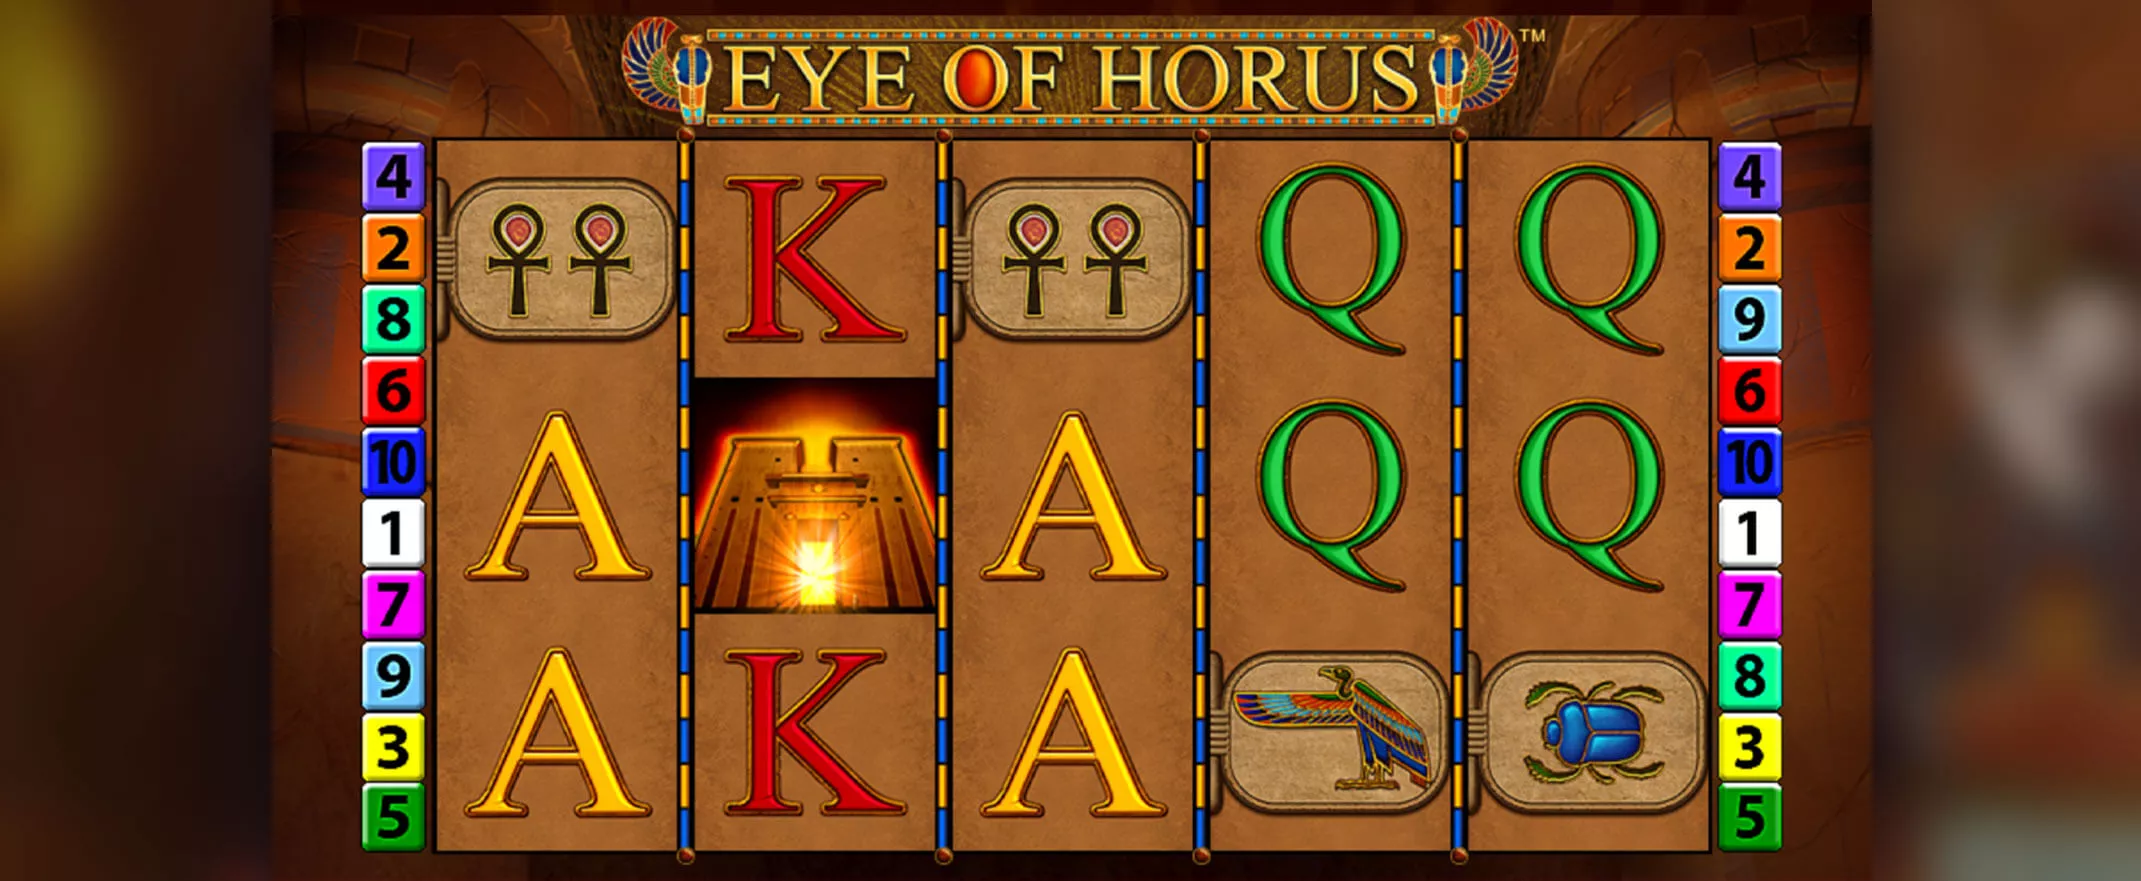 Eye of Horus Megaways slot by Blueprint Gaming